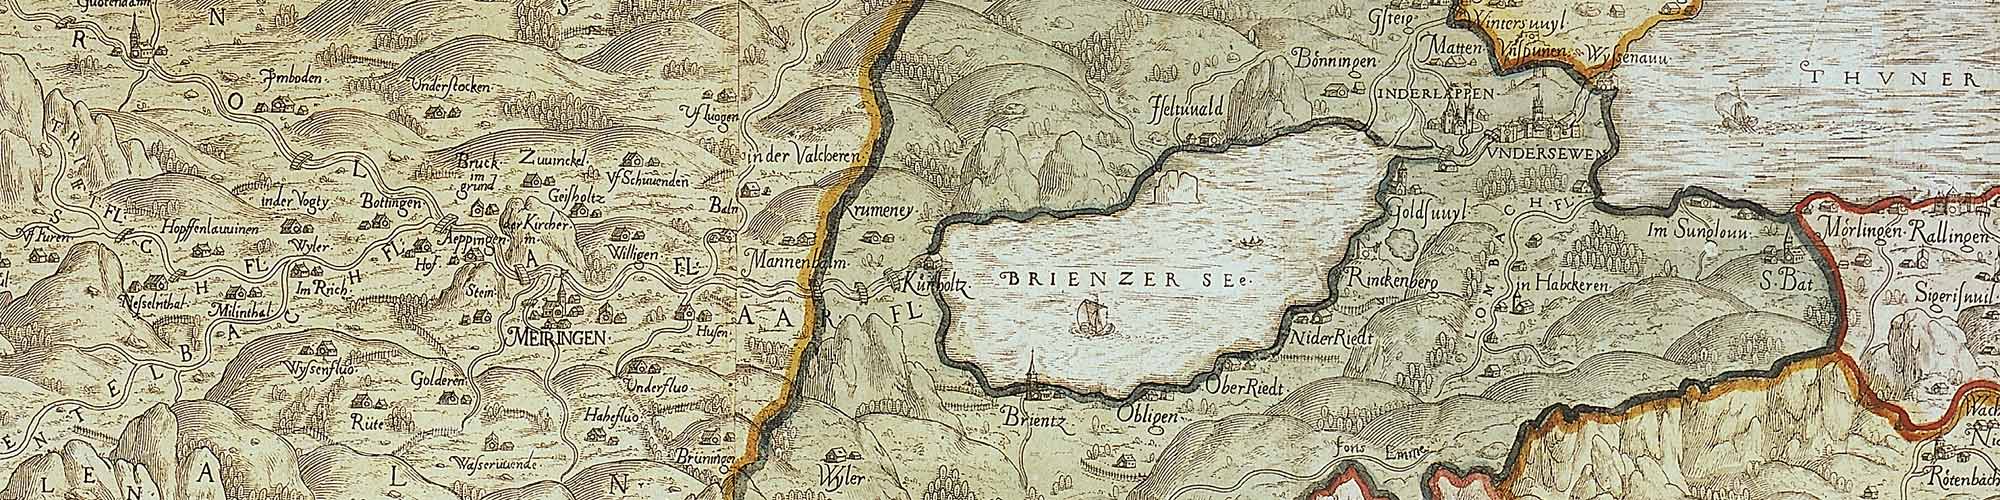 Schoepf-Karte